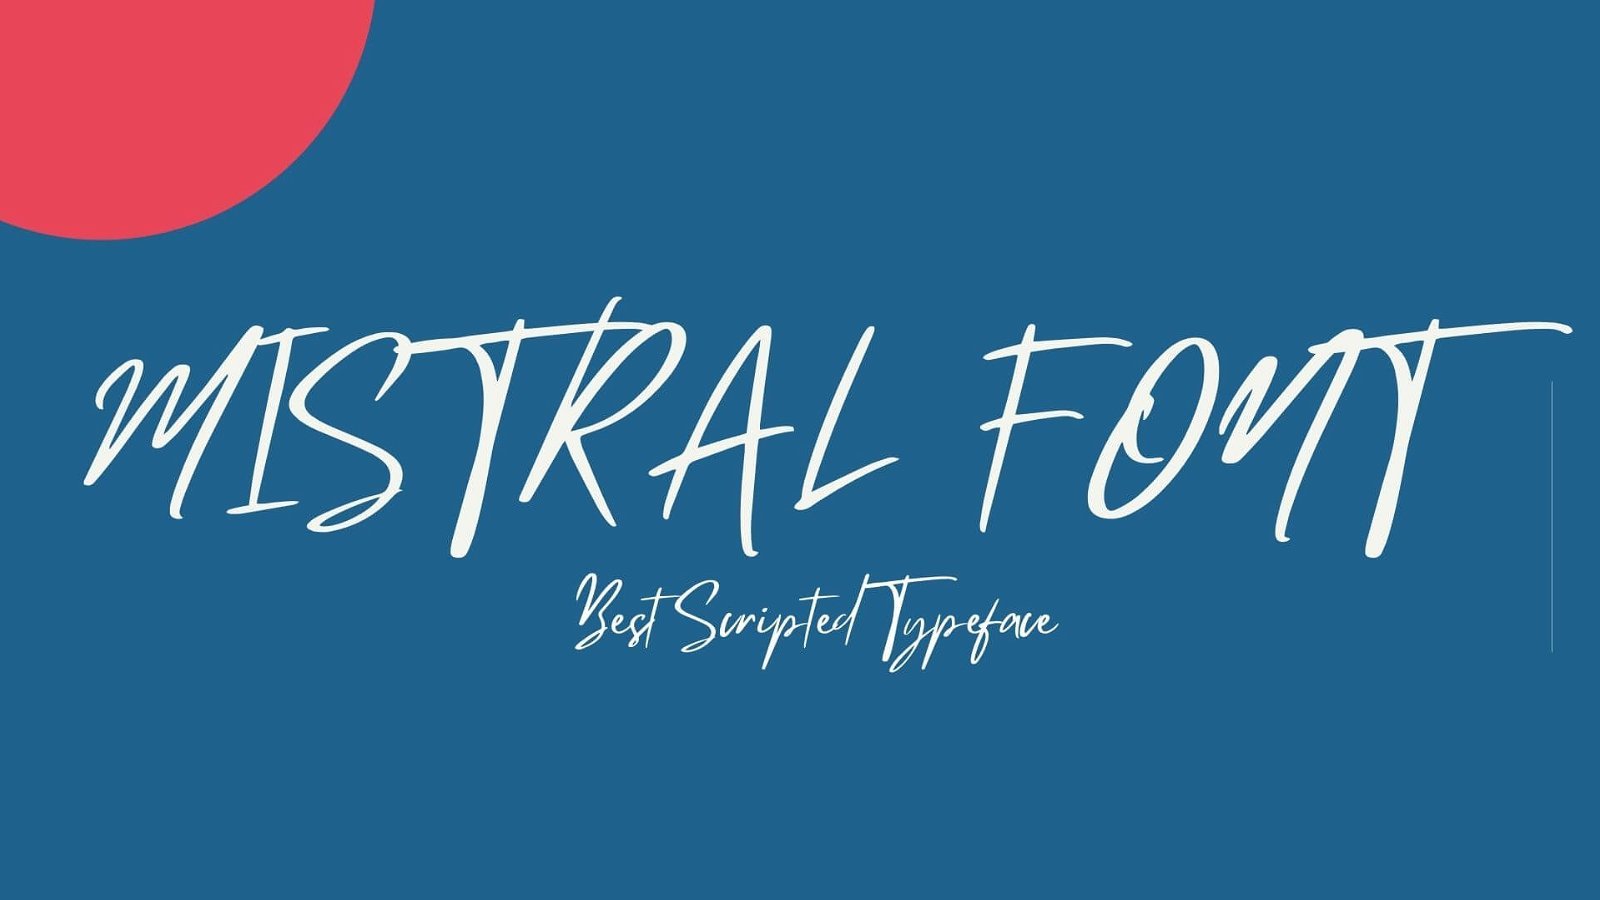 download mistral font free mac